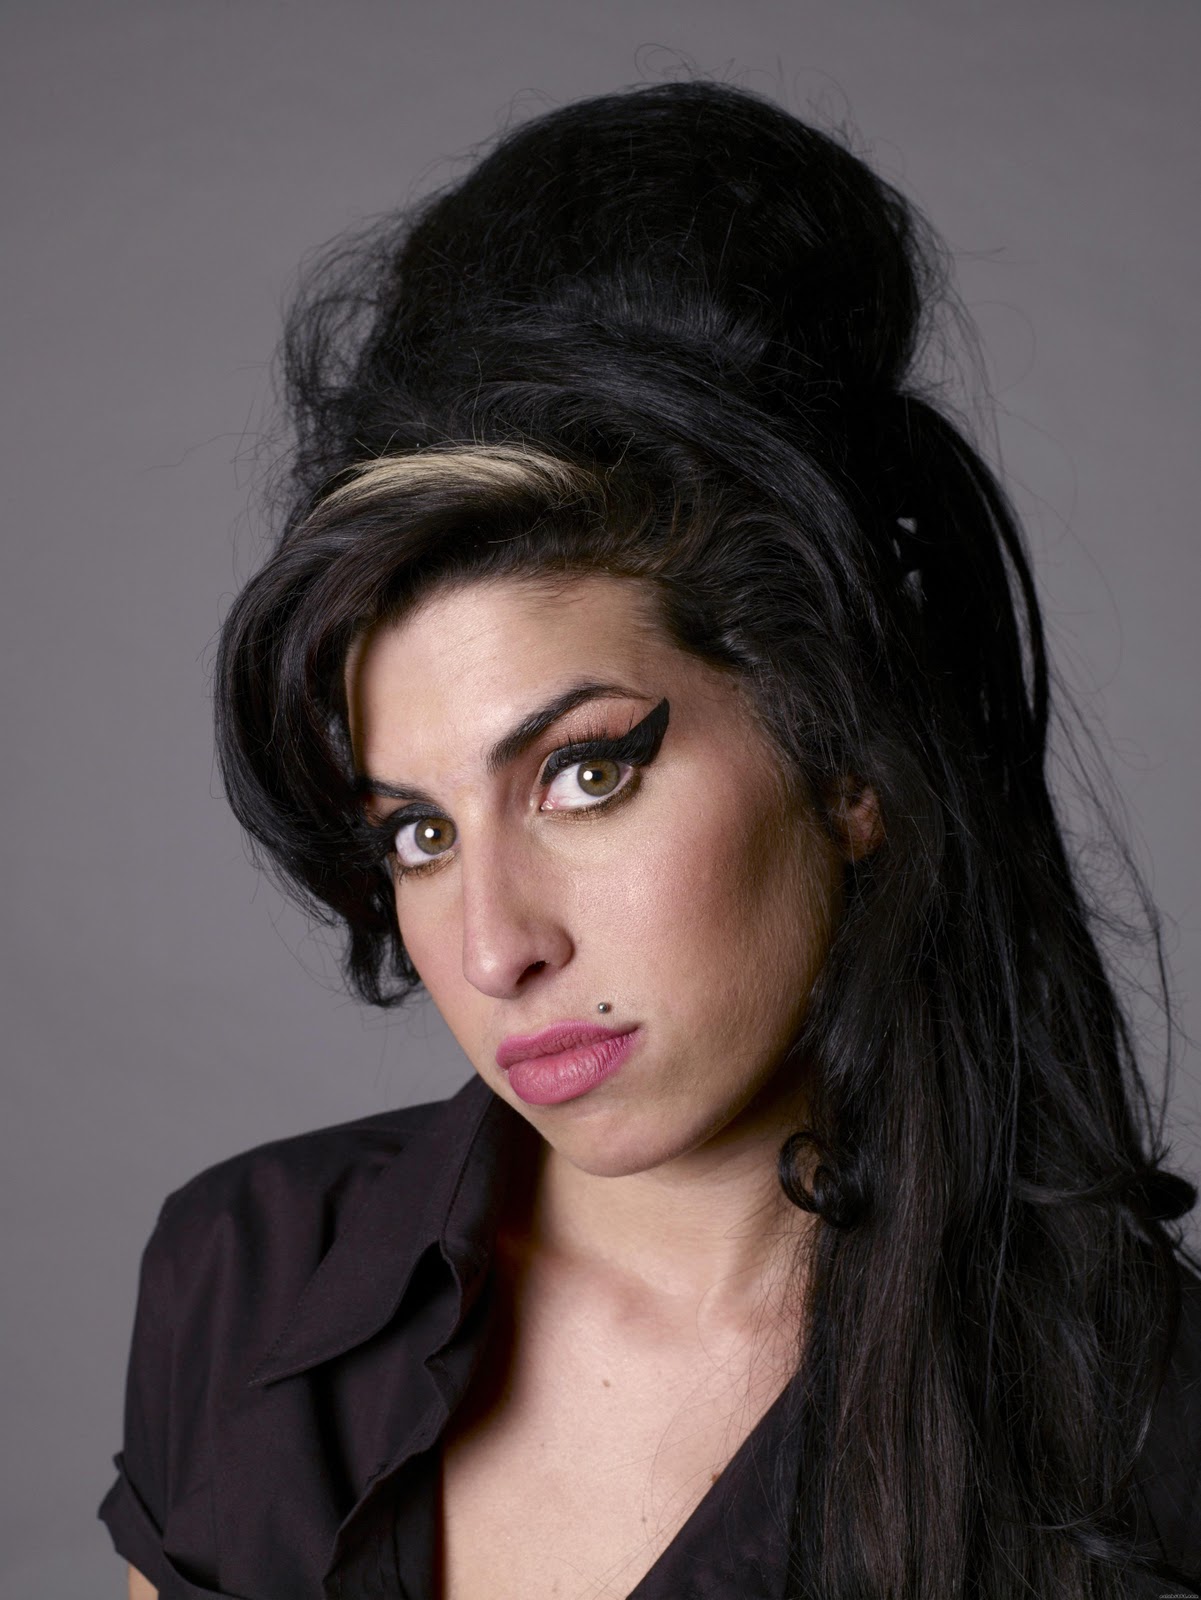 https://blogger.googleusercontent.com/img/b/R29vZ2xl/AVvXsEjbL4bR463yCCwTAa0A718DVK9TLdrCogRmVxllAddbfCWuQnXMQJmvDYXhureR2lFrAL8owg8kG17Q5aButq18sPvG2s1MCSbQNHYqILpkputE05D2dg0Xs8kE39I-VQ7JtUtTvNTkMA/s1600/Amy+Winehouse.jpg